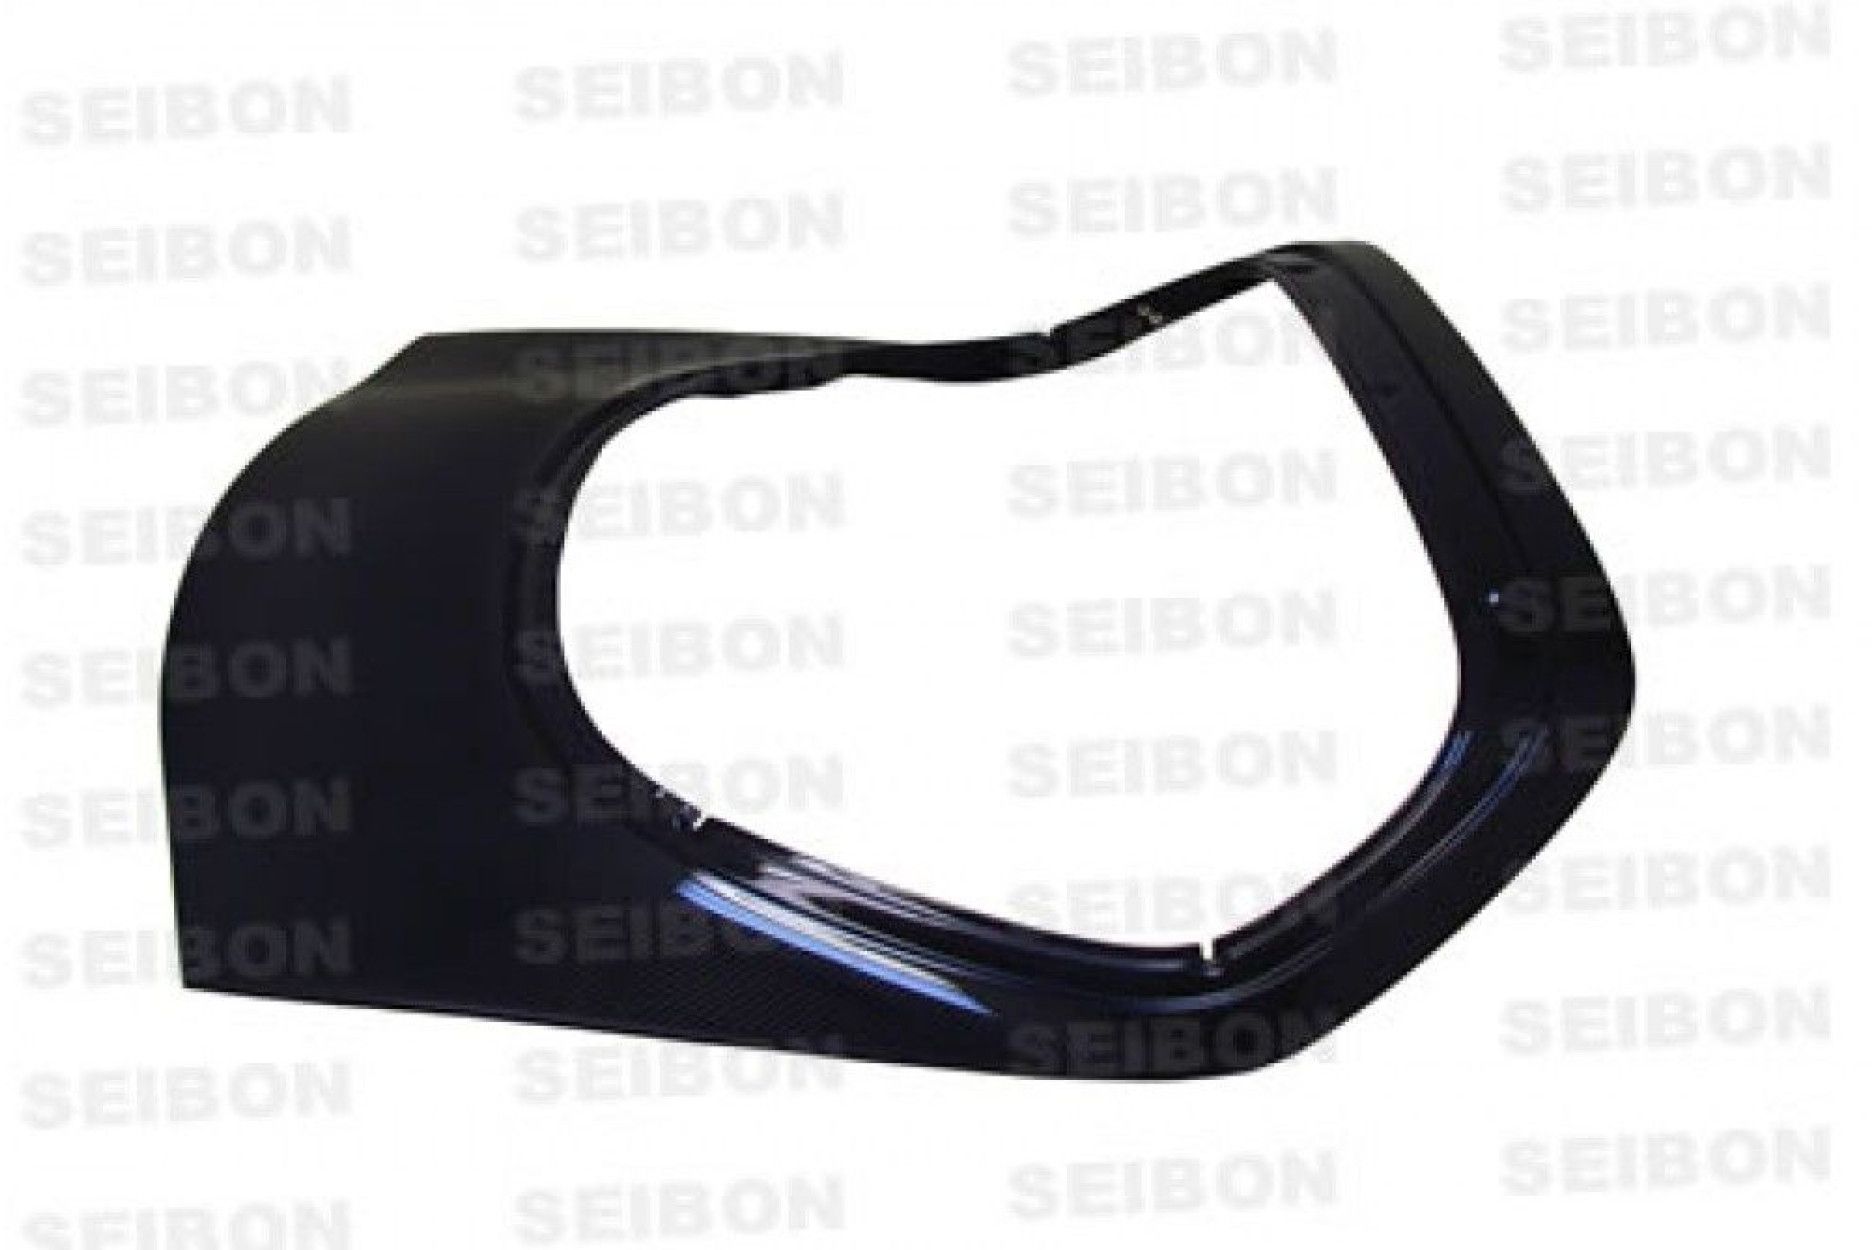 Seibon carbon TRUNK for MAZDA RX-7 1993 - 2002 OE-style